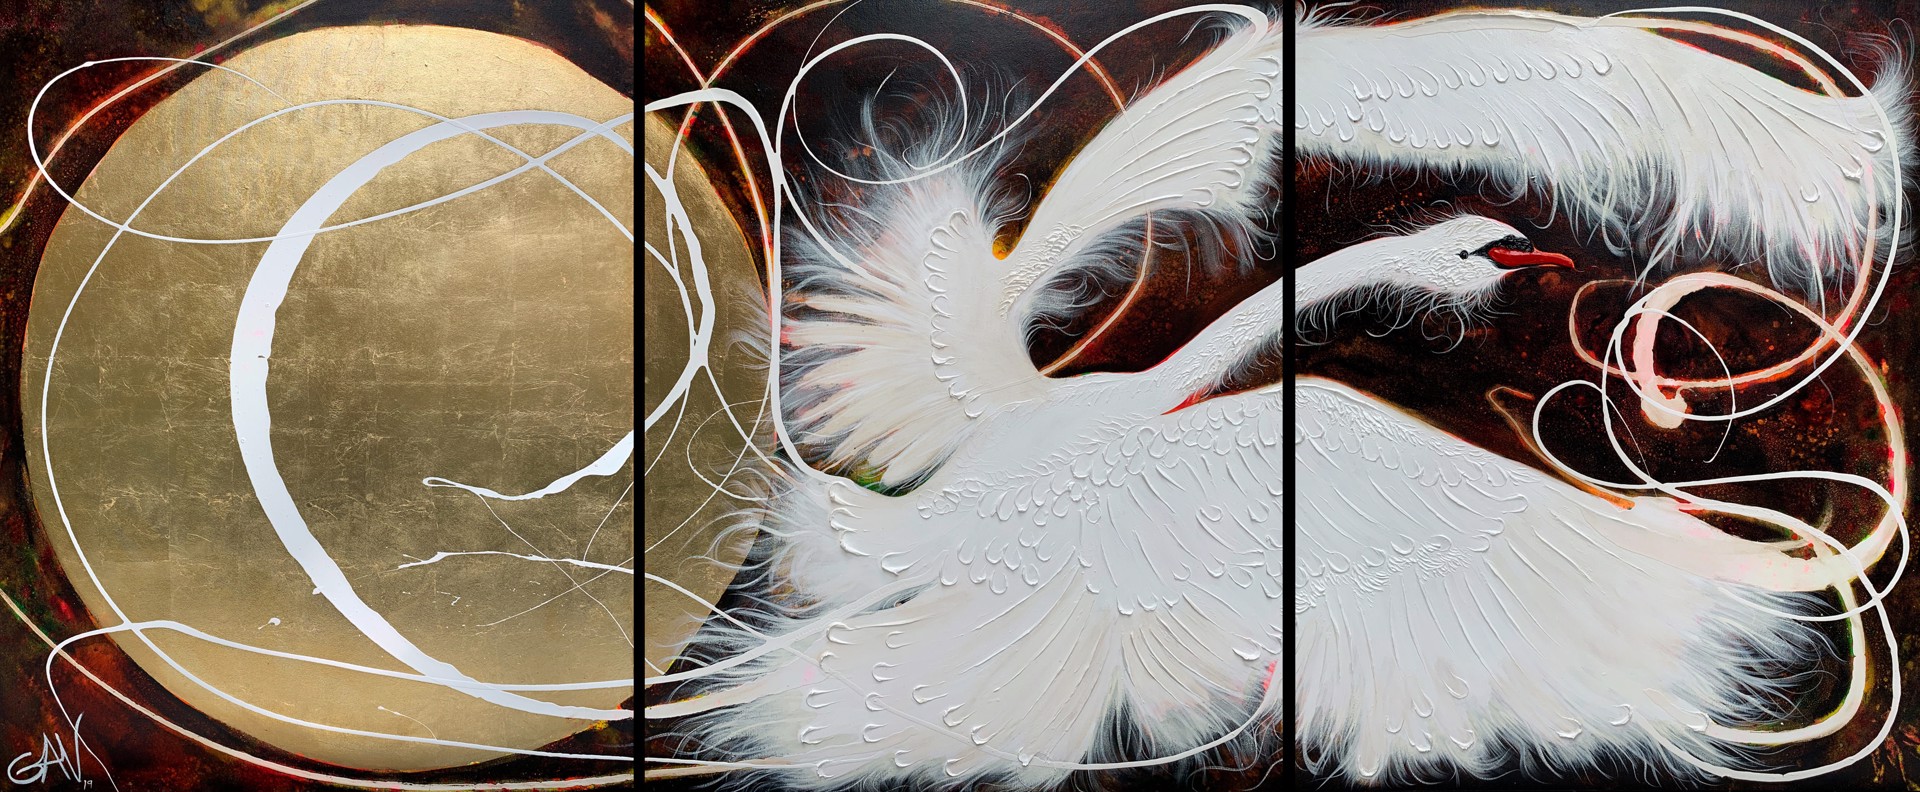 White Swan (Triptych) by Gav Barbey